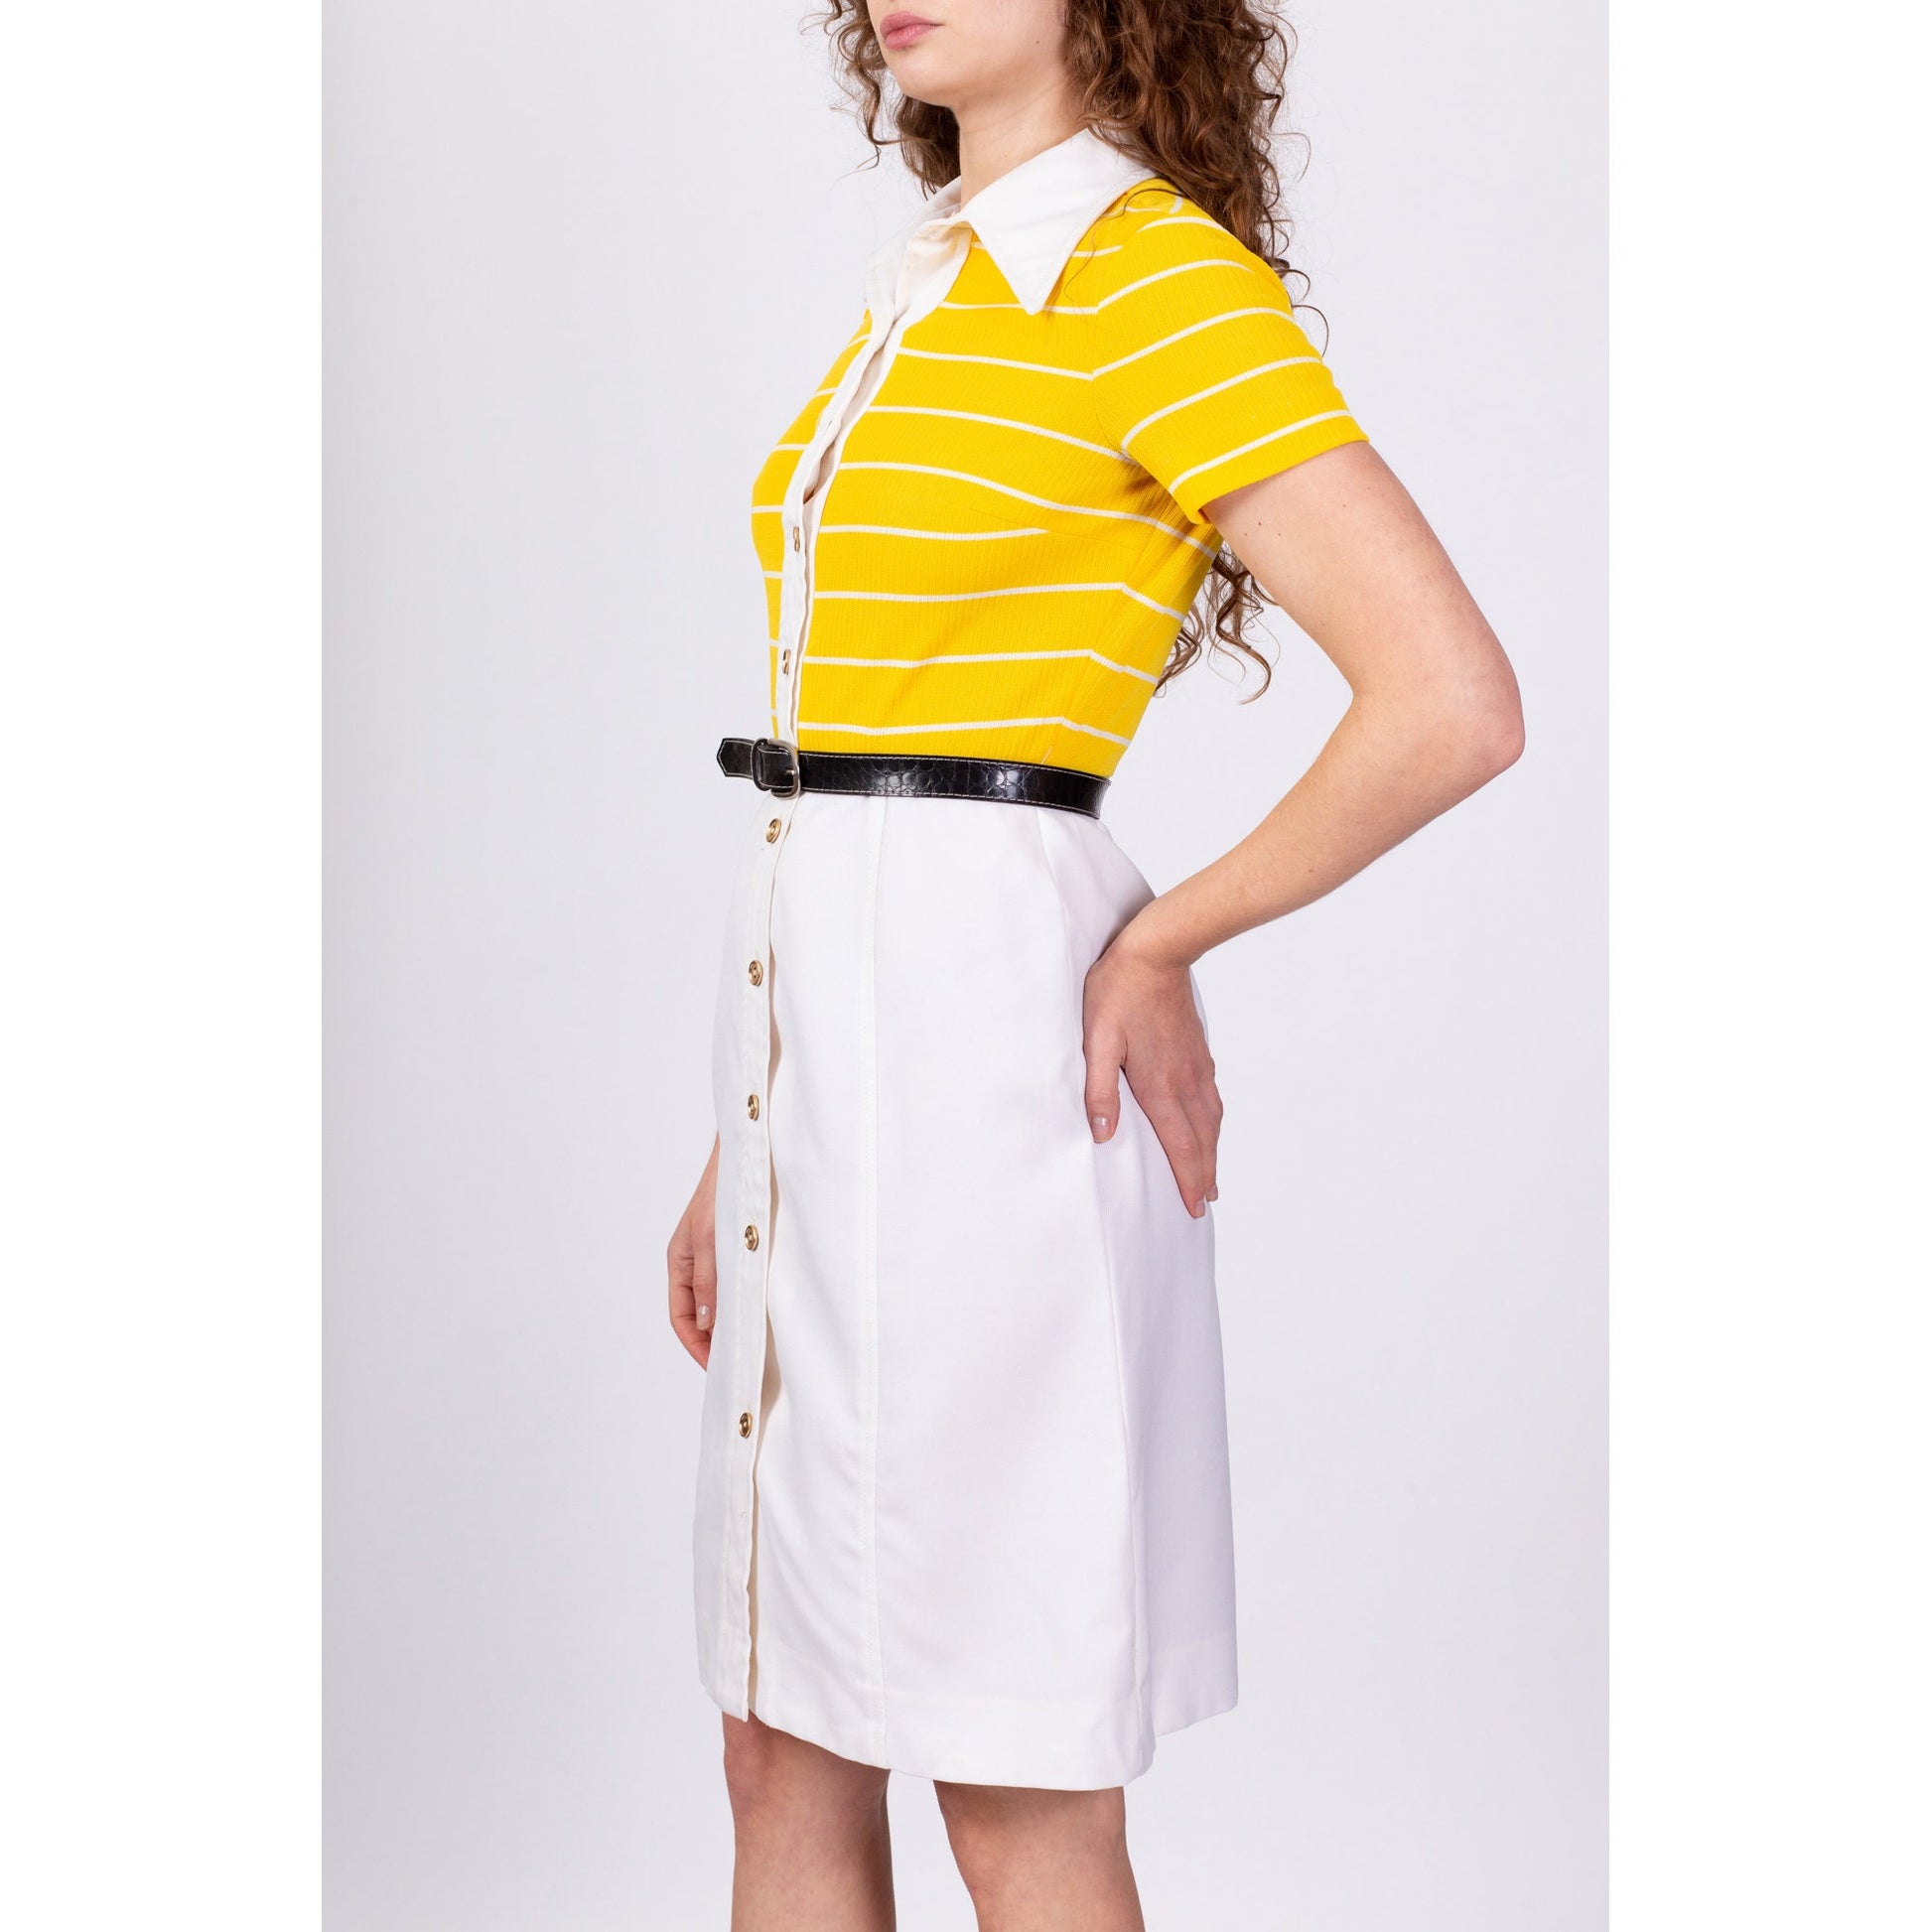 60s Yellow & White Striped Mini Dress - Small